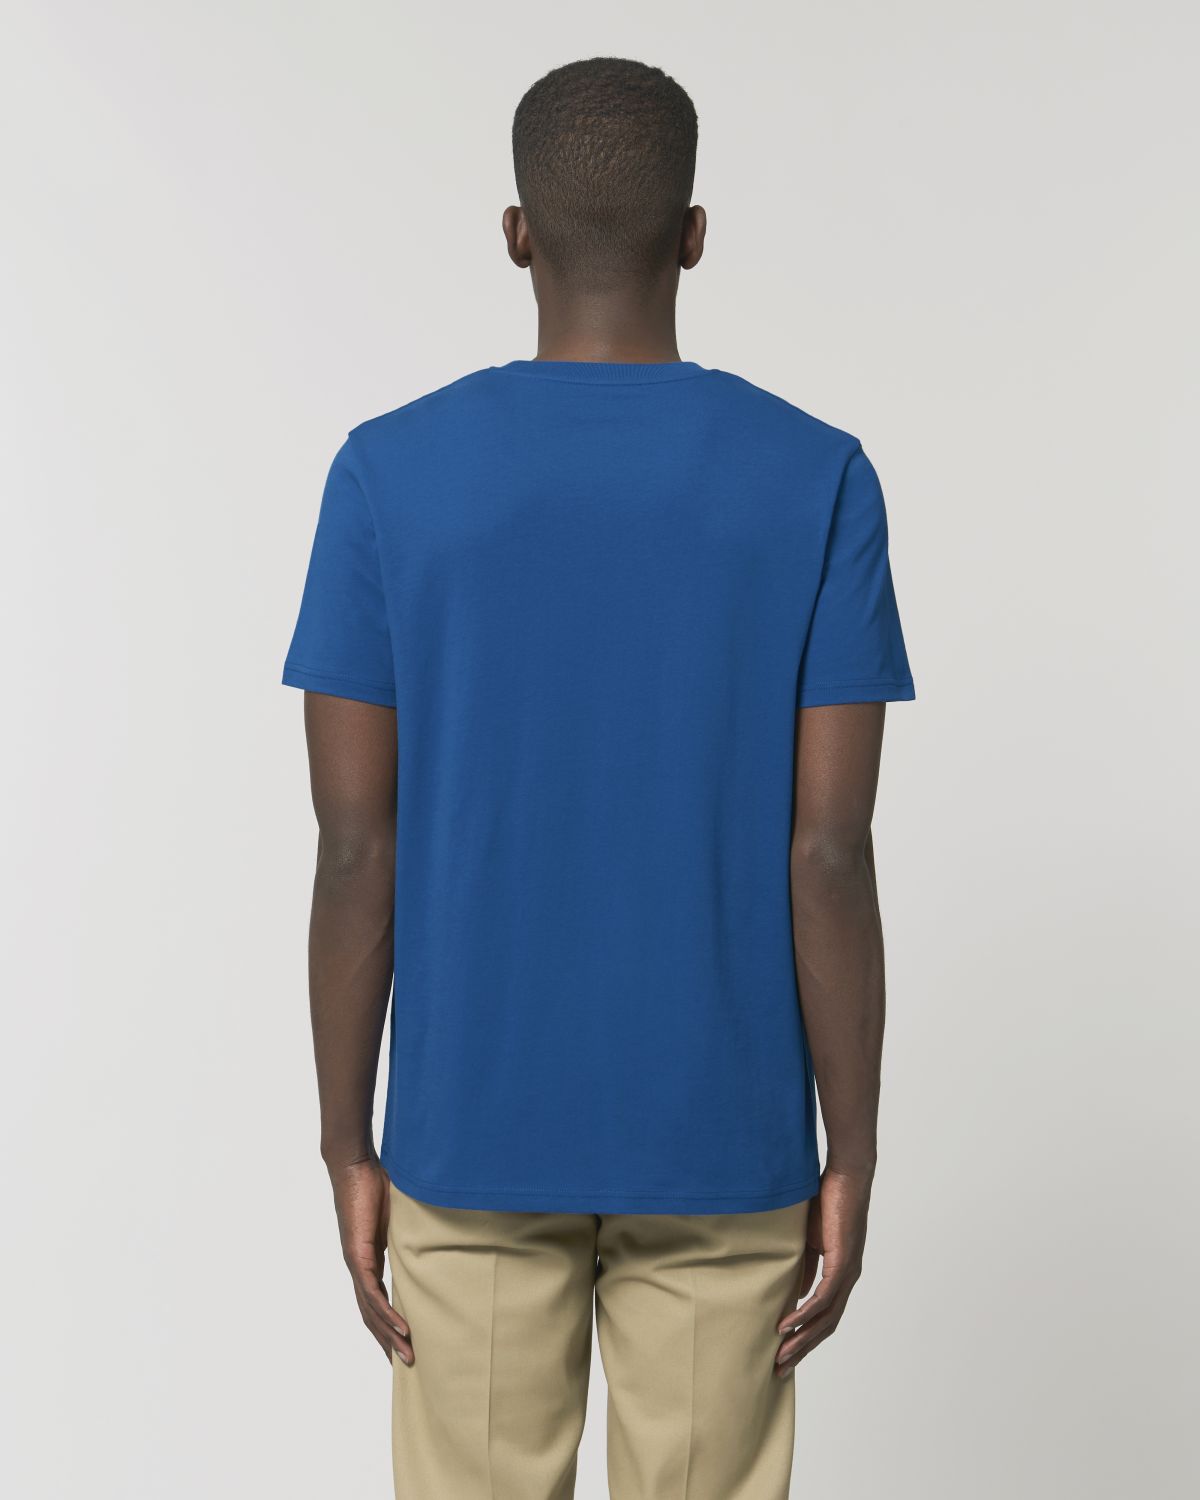 Blaue unsterbliche Männer T-Shirt - DP